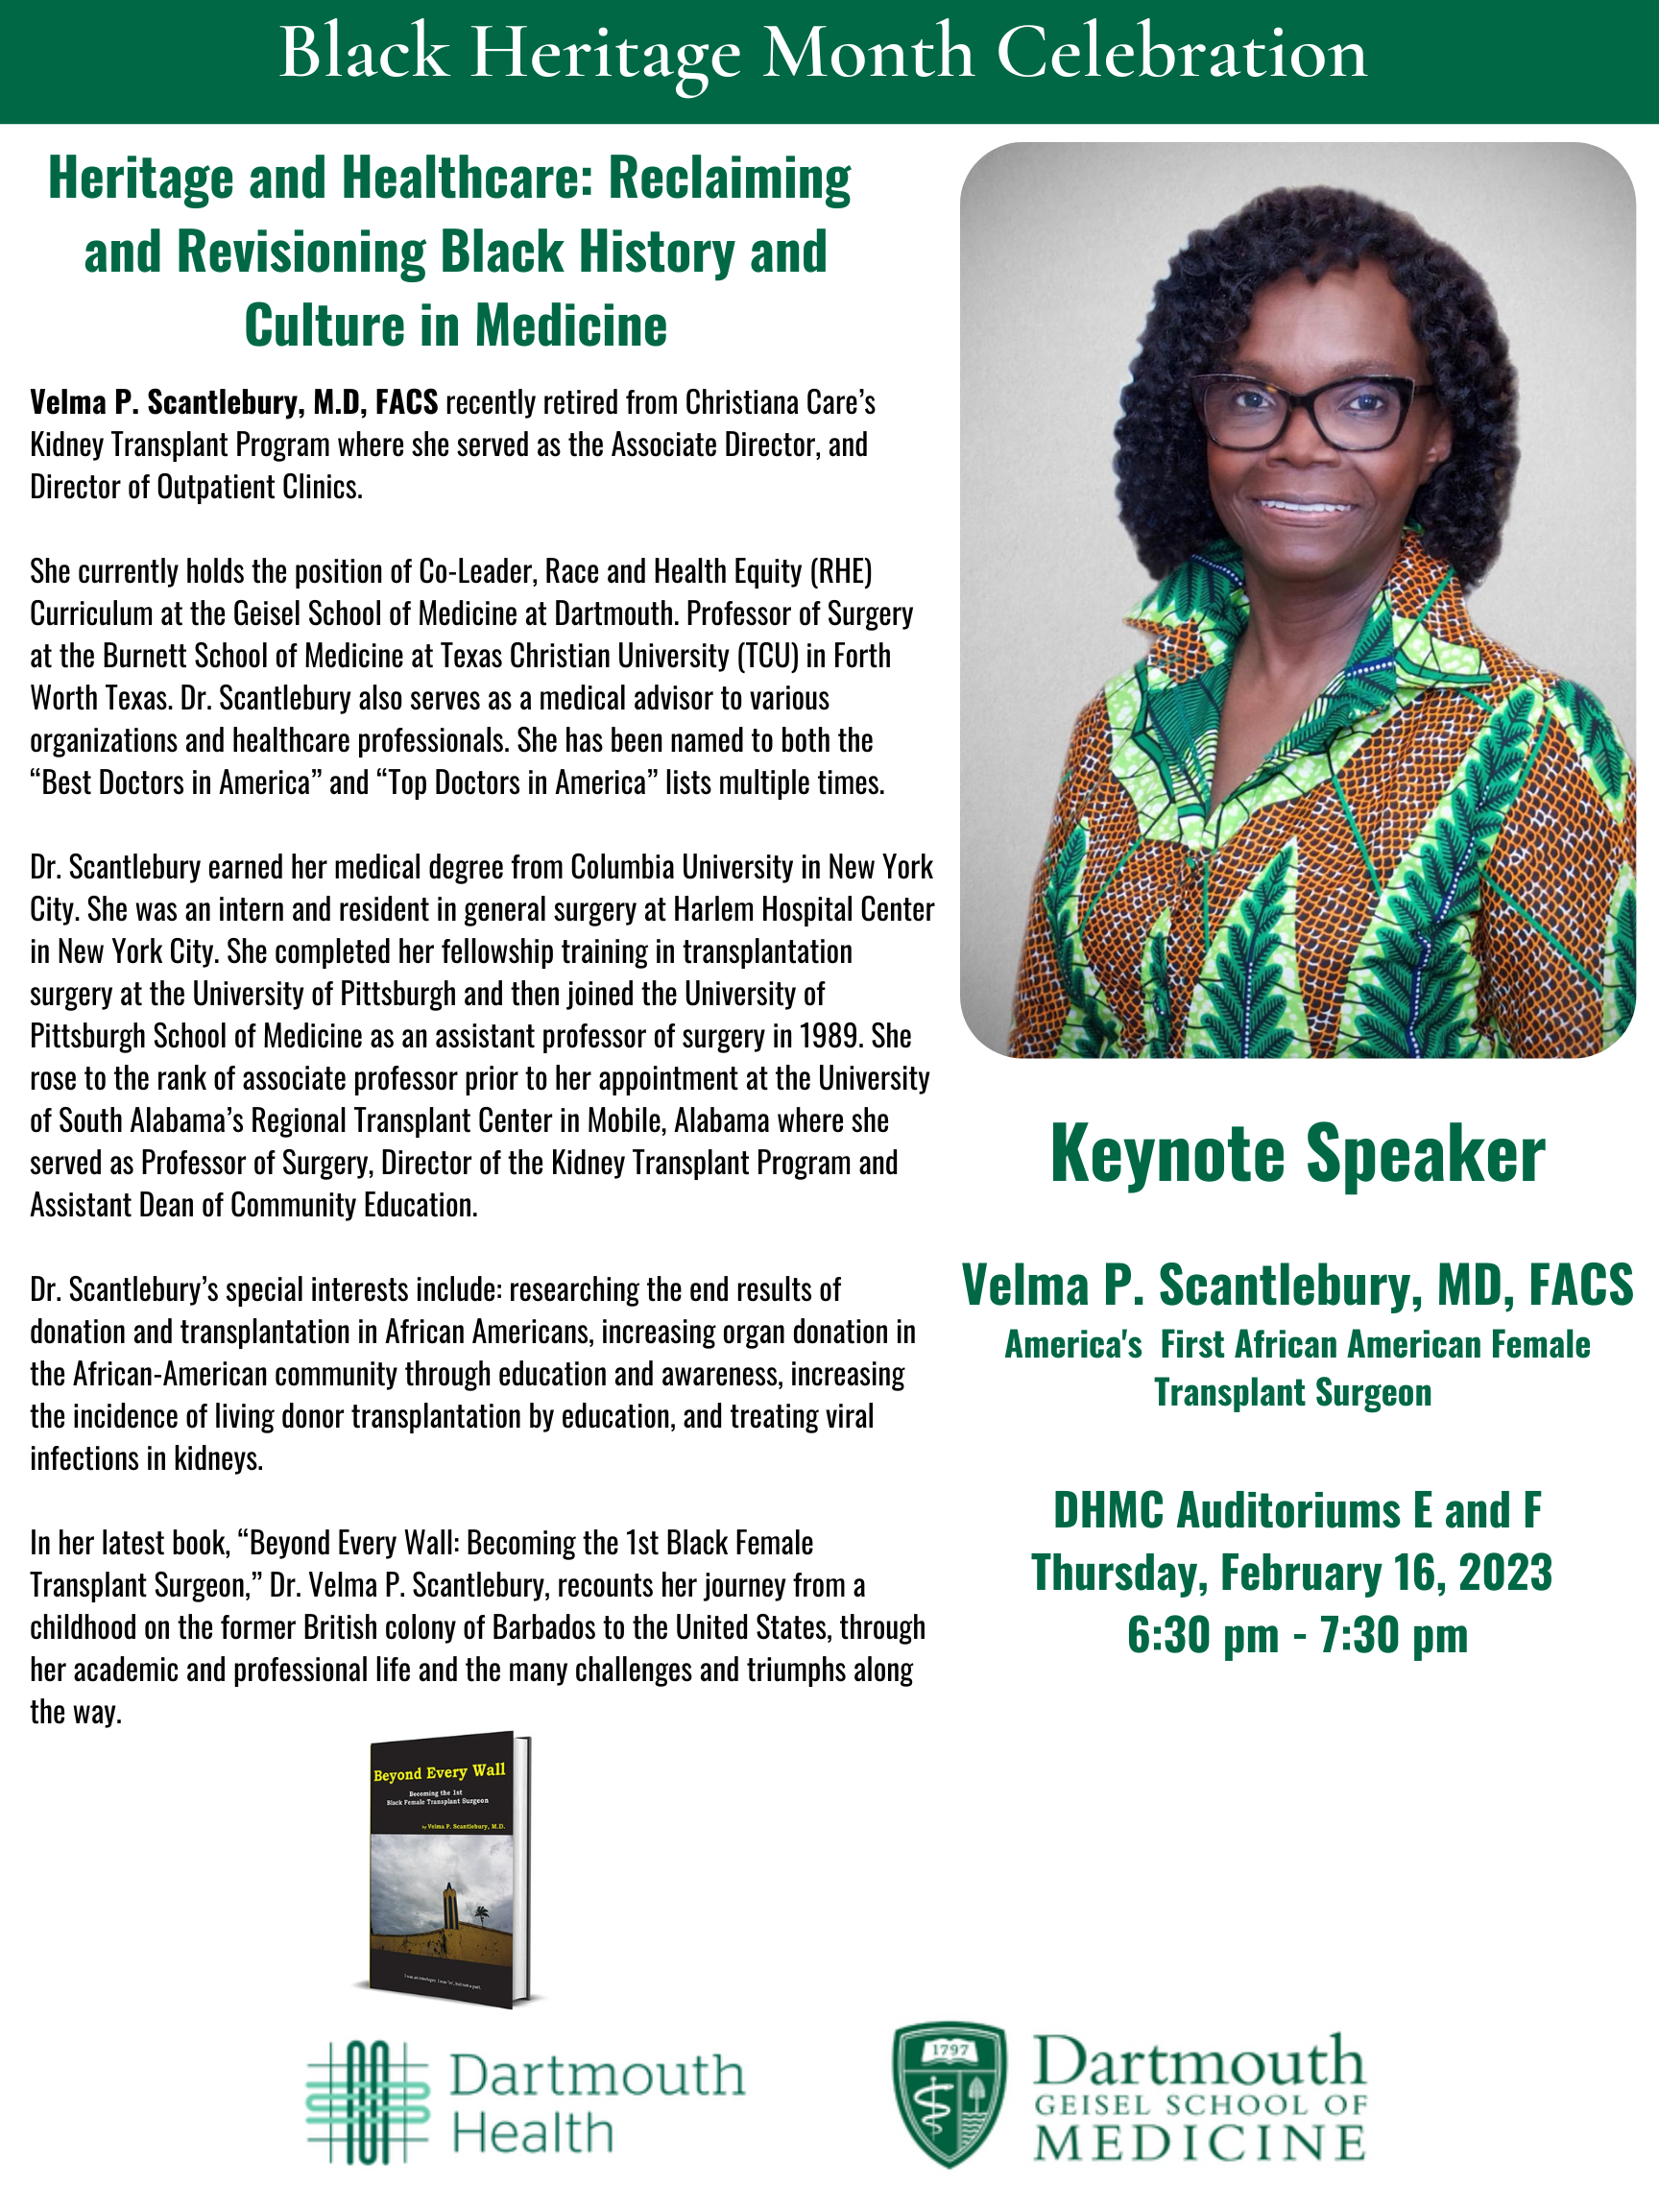 Black History Month keynote speaker